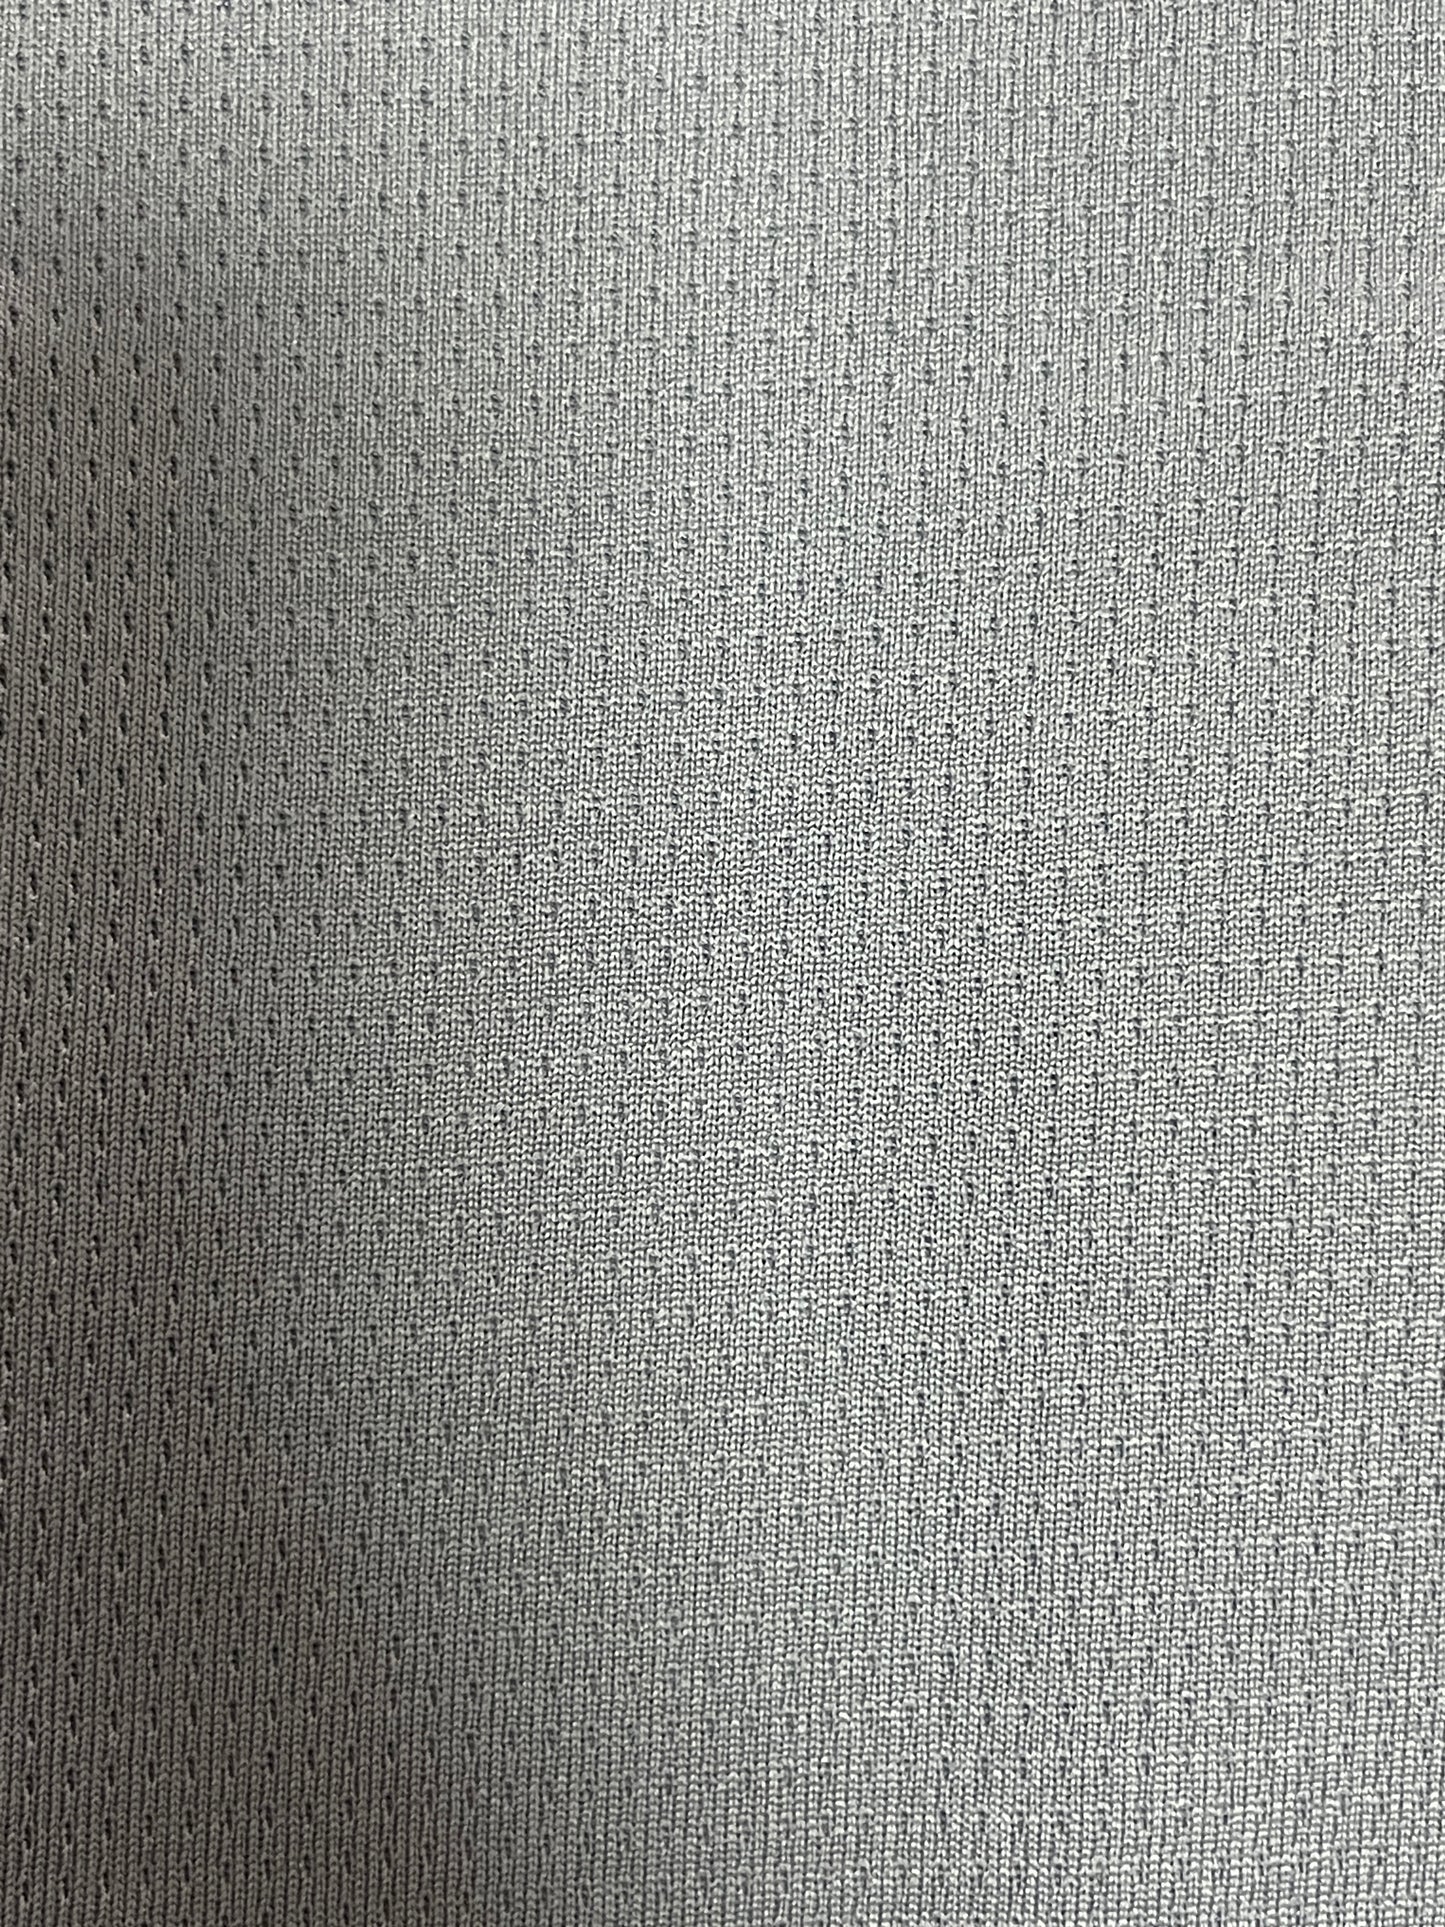 Functional Quick Dry Football & Basketball Fabric --100% Polyester - Natasha Fabric